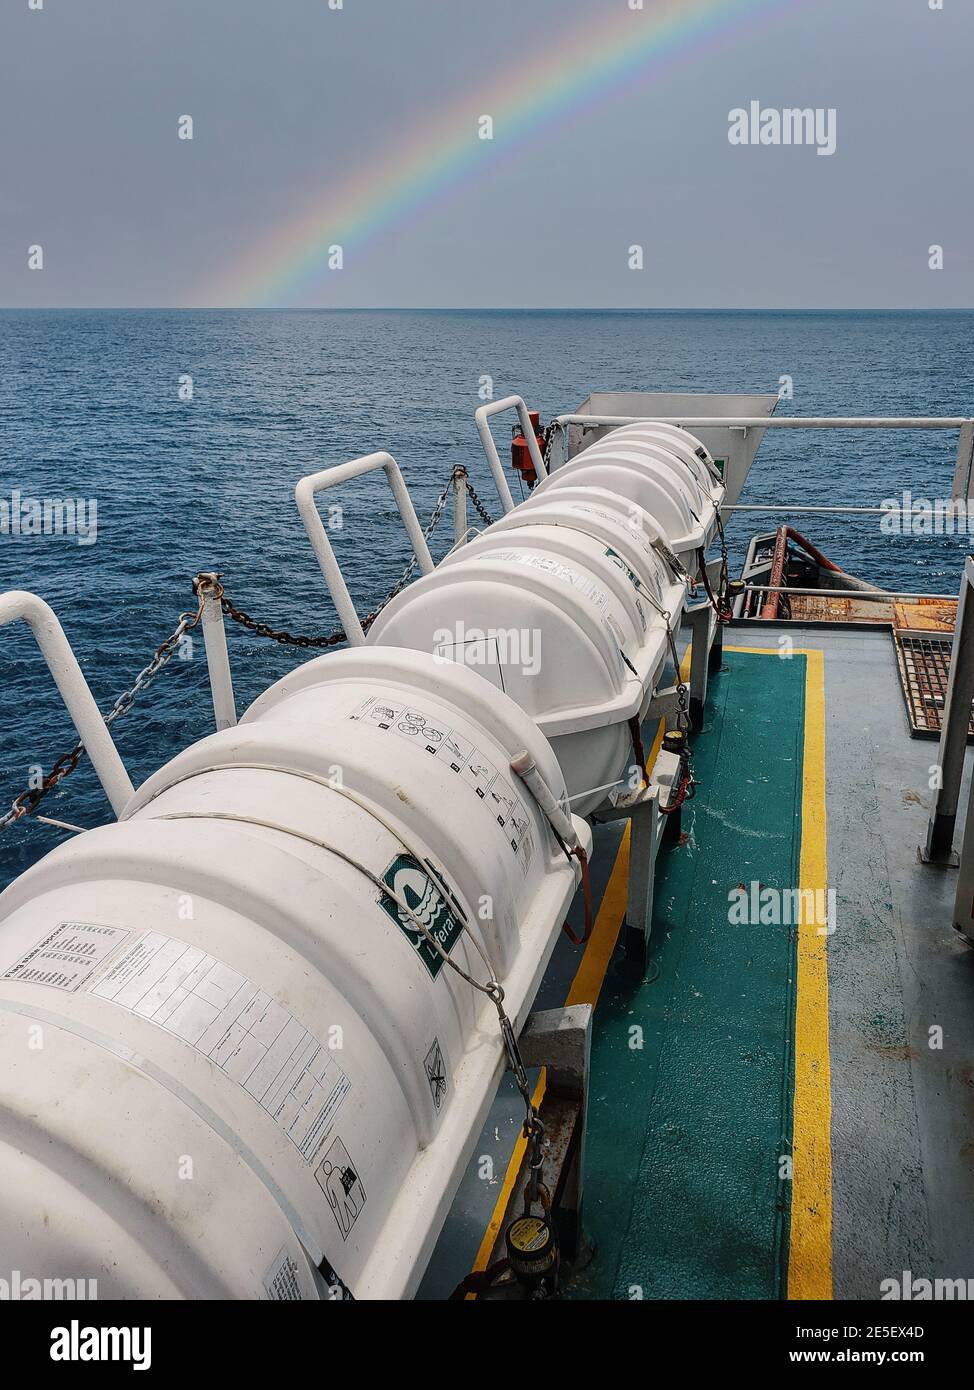 Liferafts on the deck of ocean offshore vessel. LSA life saving equipment. Stock Photo